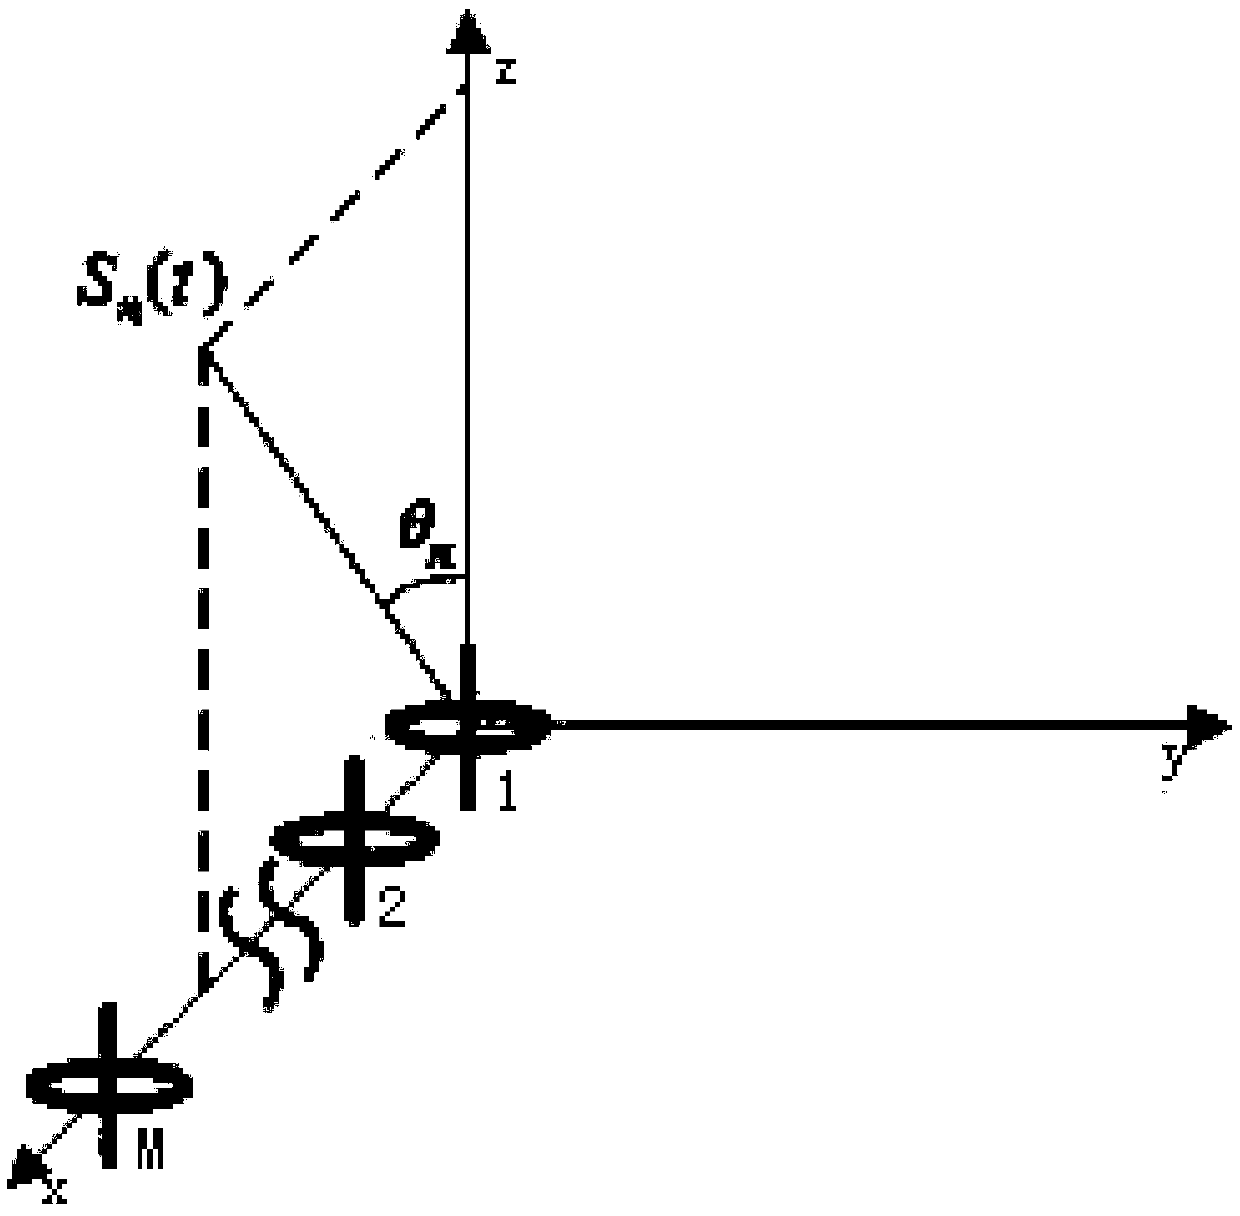 COLD array arrival direction and polarization parameter joint estimation method based on resampling